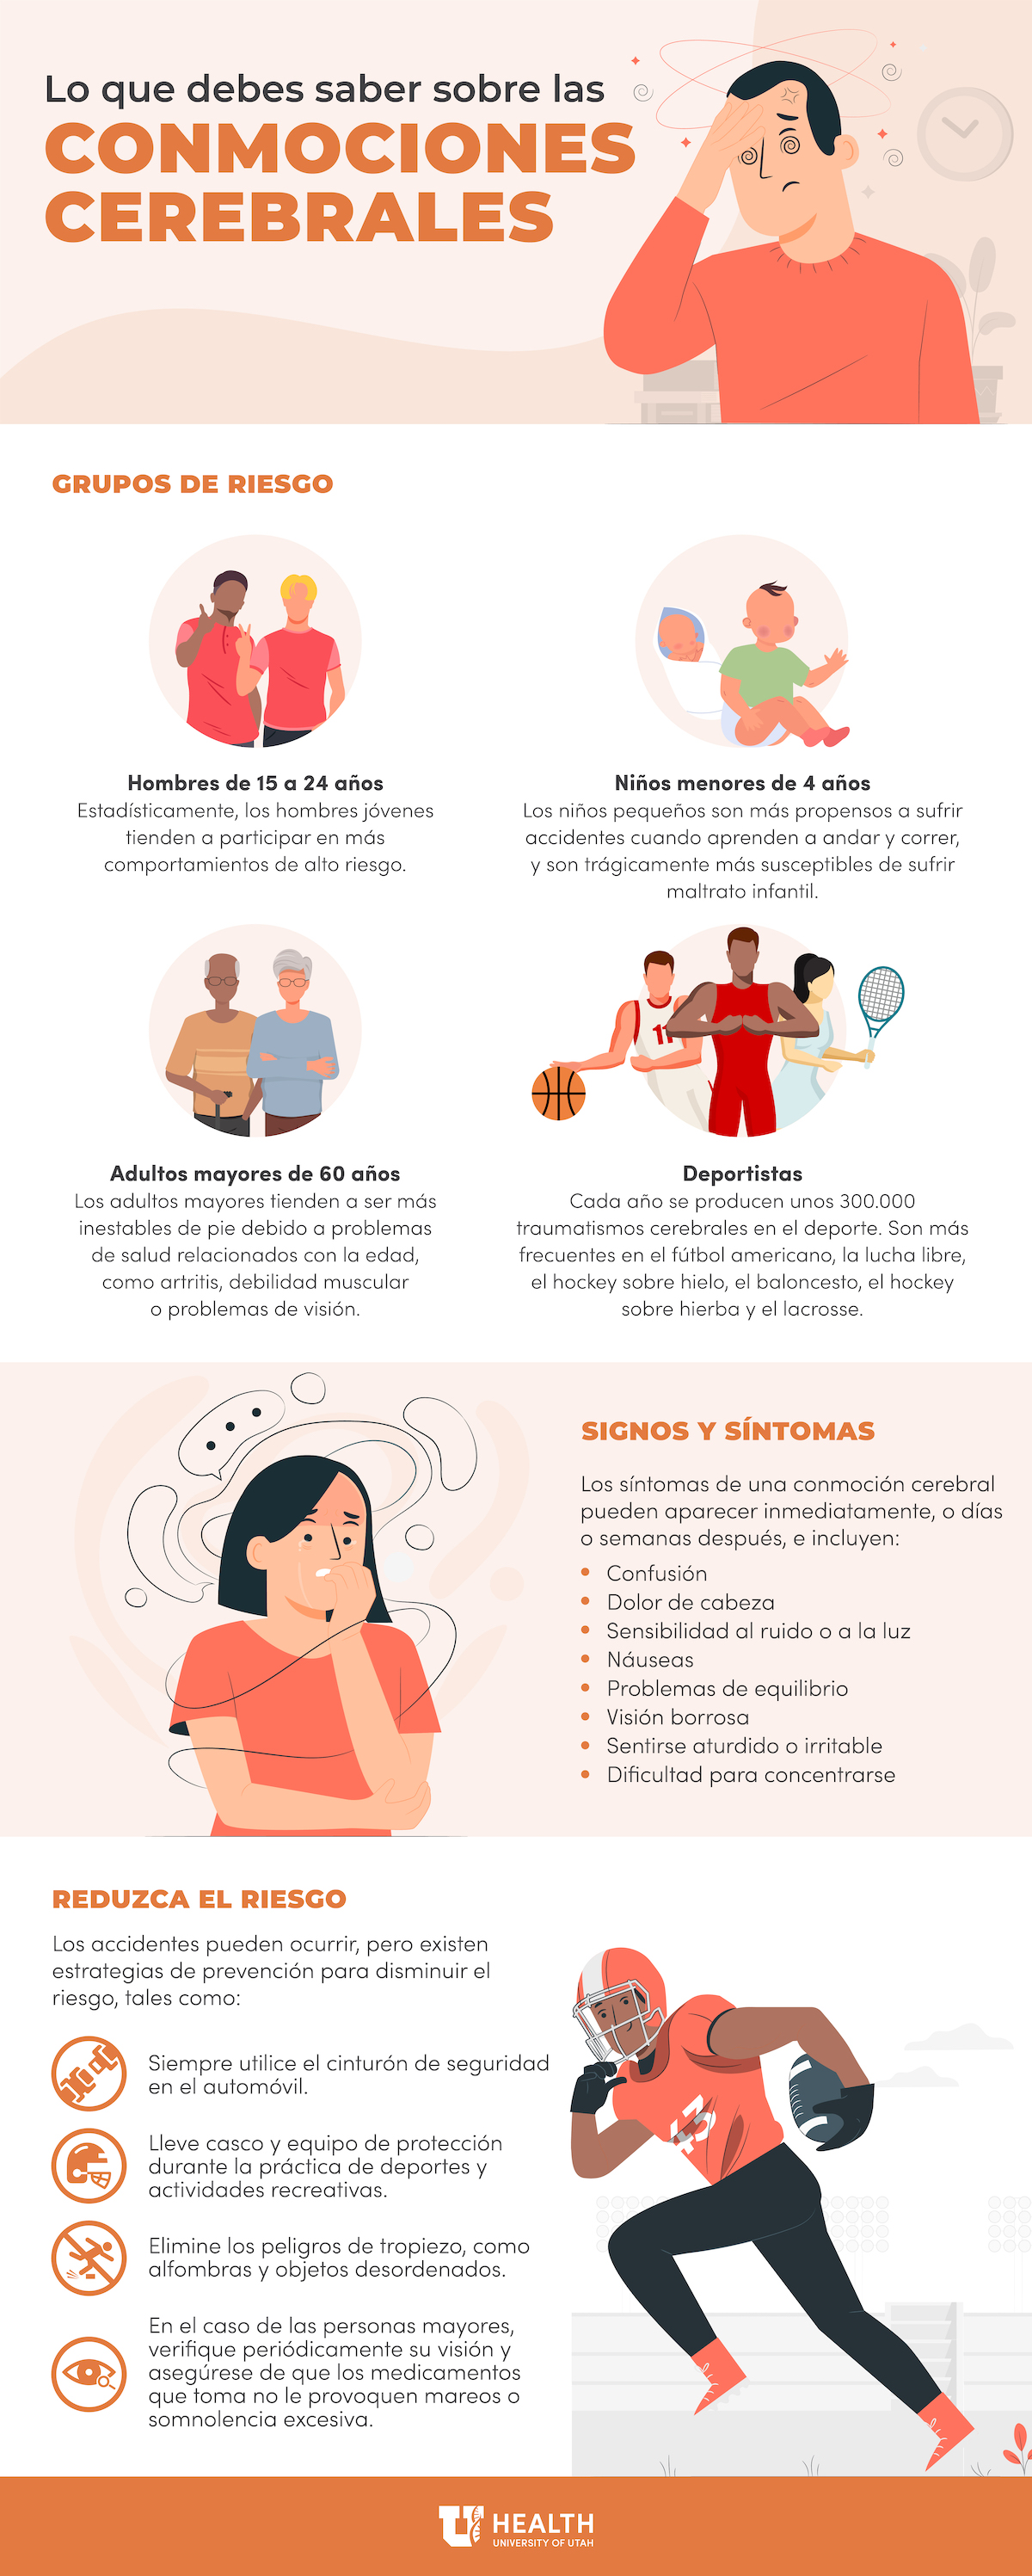 Concussions 101 Spanish infographic 